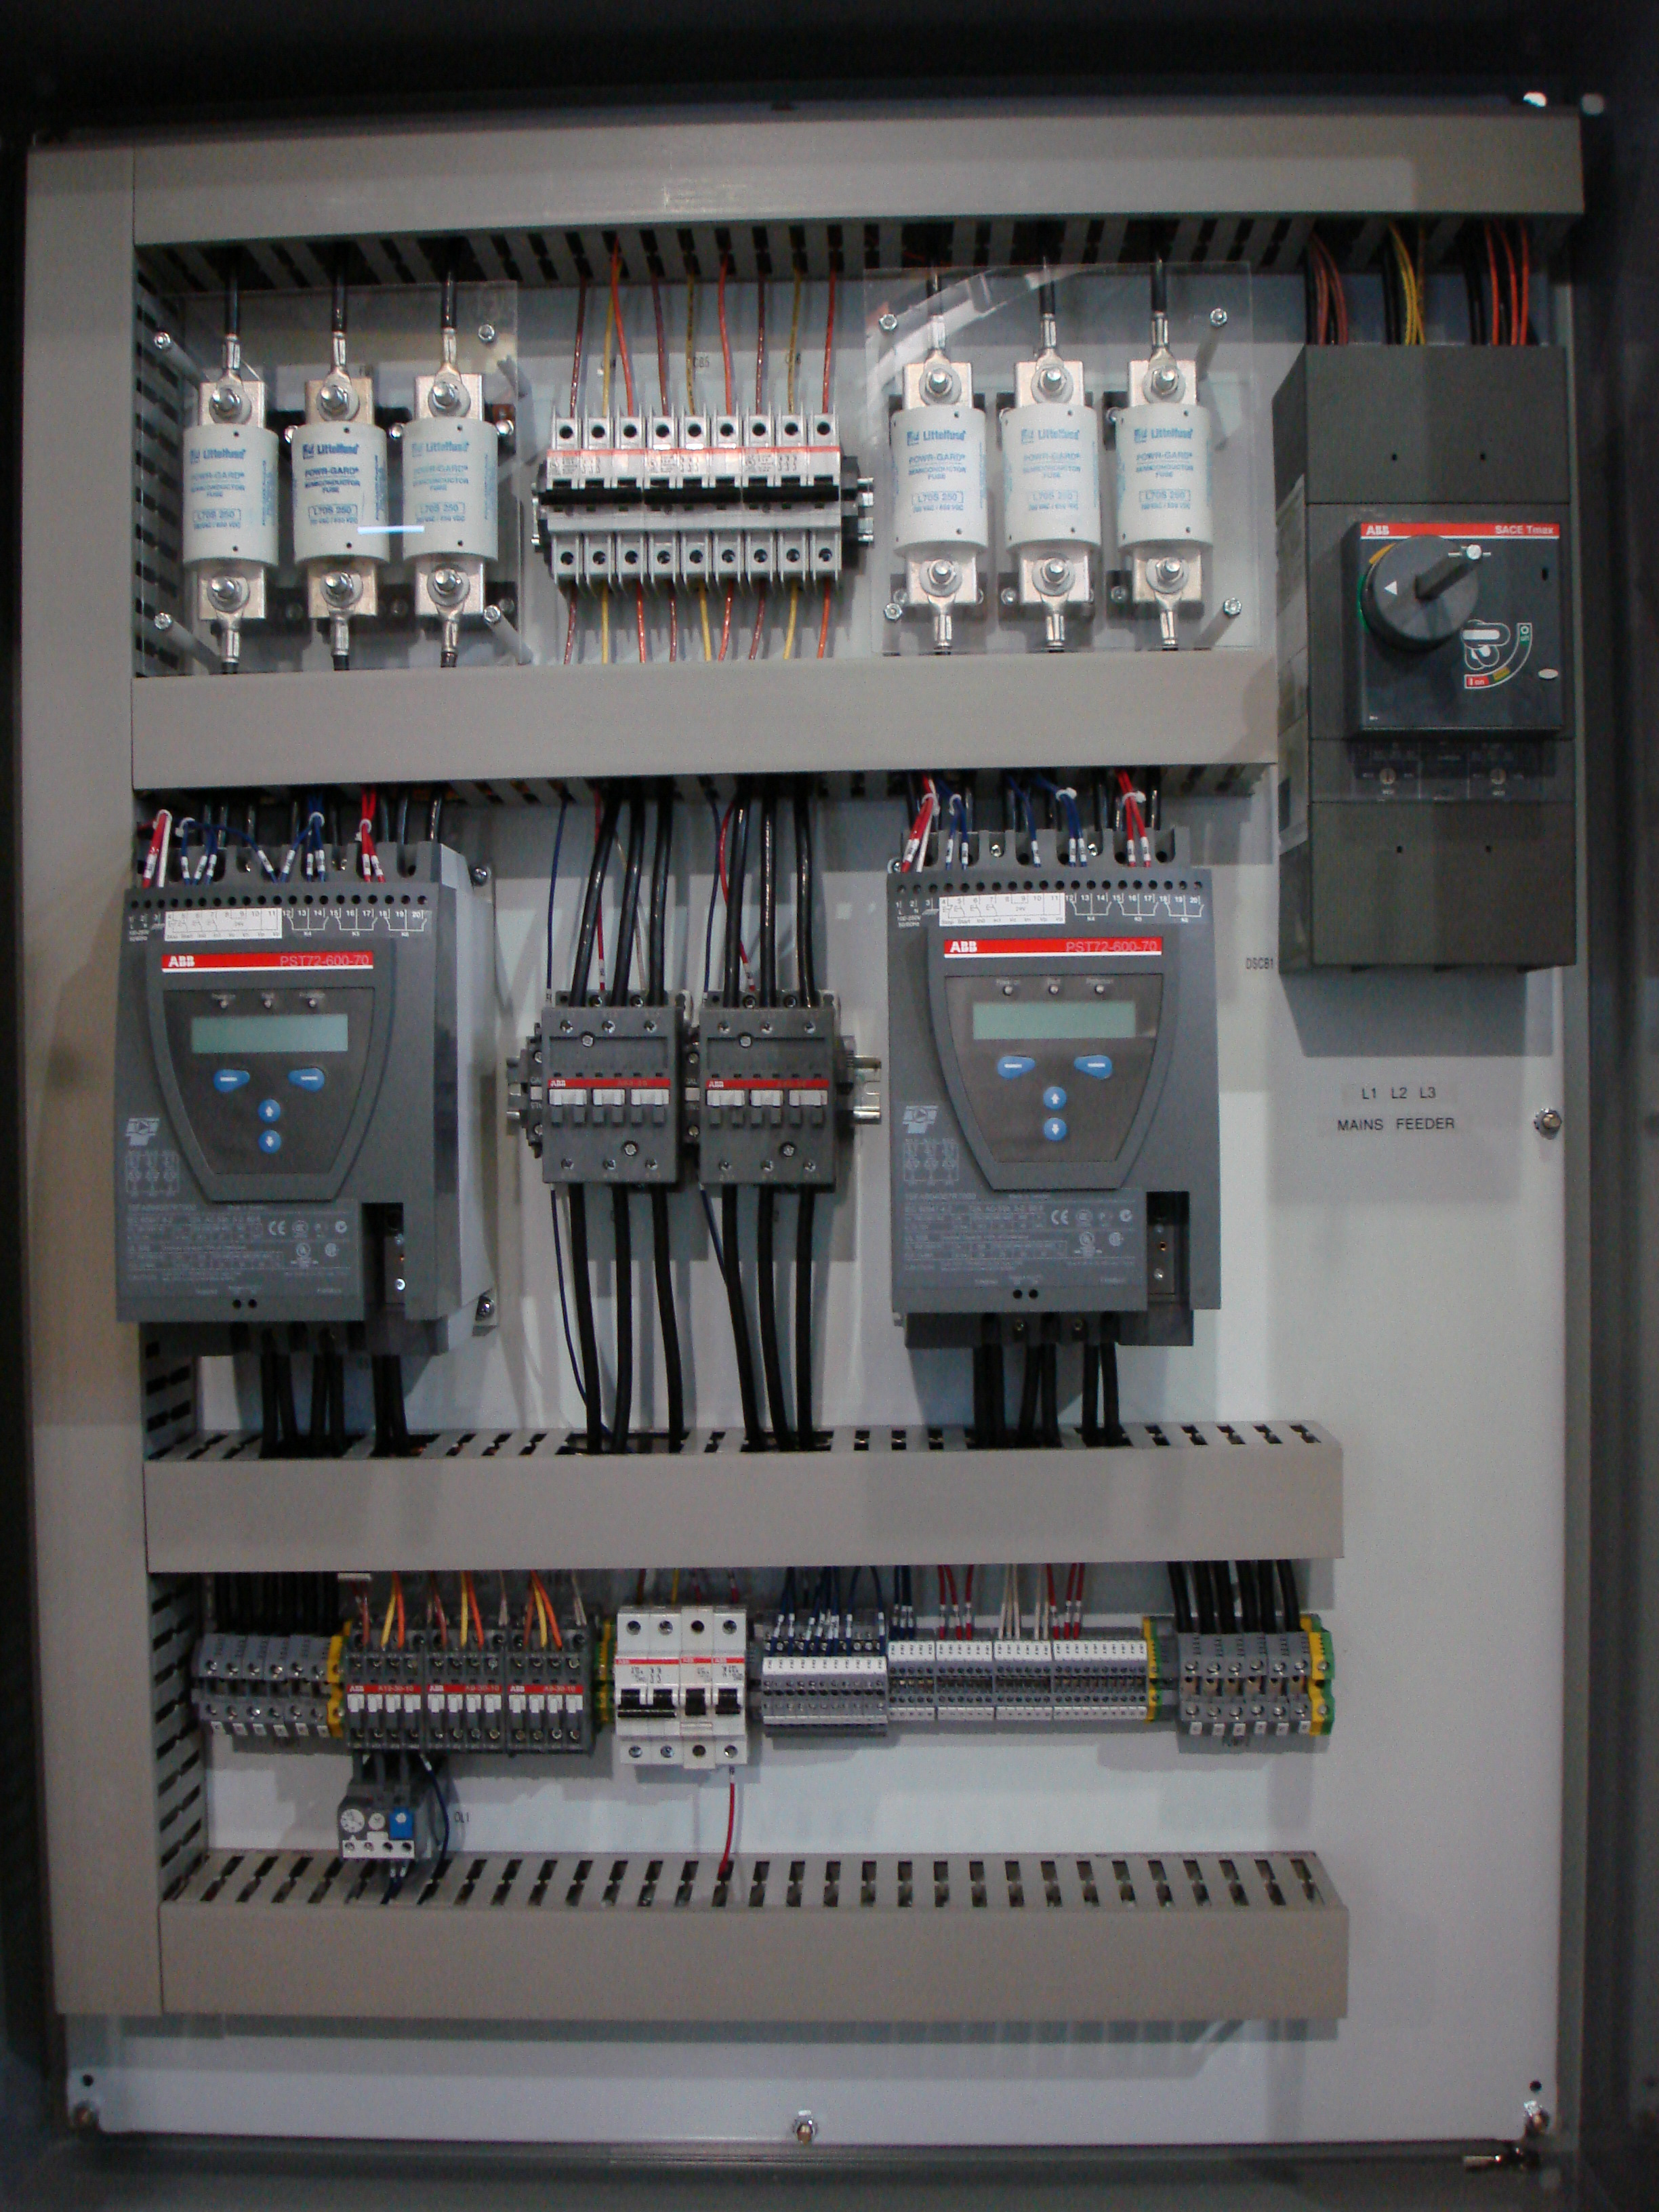 Sample of an AAR control panel interior